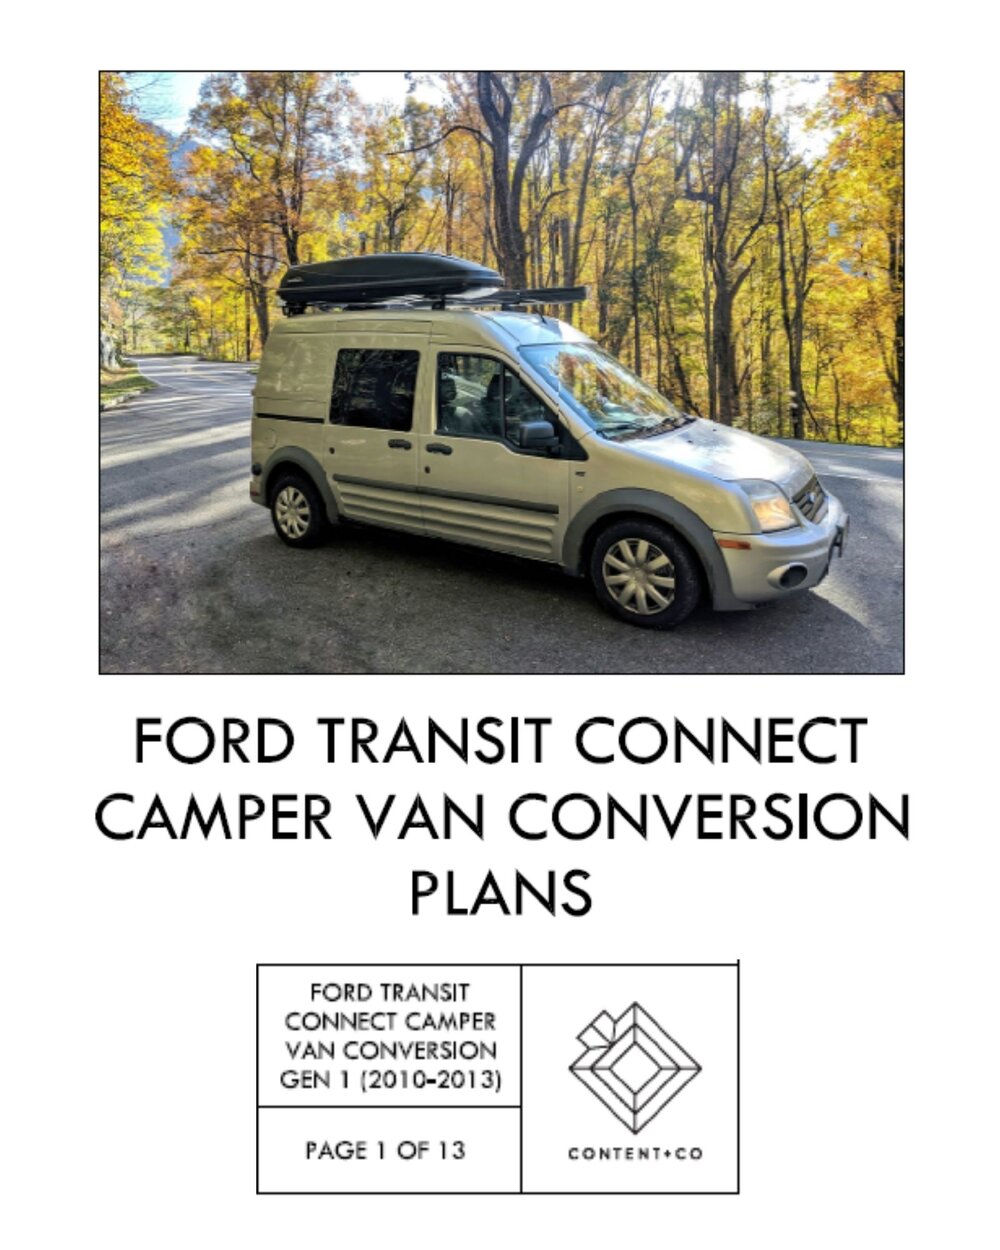 https://images.squarespace-cdn.com/content/v1/586526c2d482e92ded4b23d2/1625840186852-HOZCQWABLZCWH2FIU6L6/Cover+Page+-+Ford+Transit+Connect+Camper+Van+Conversion+2010-2013.jpg?format=1000w